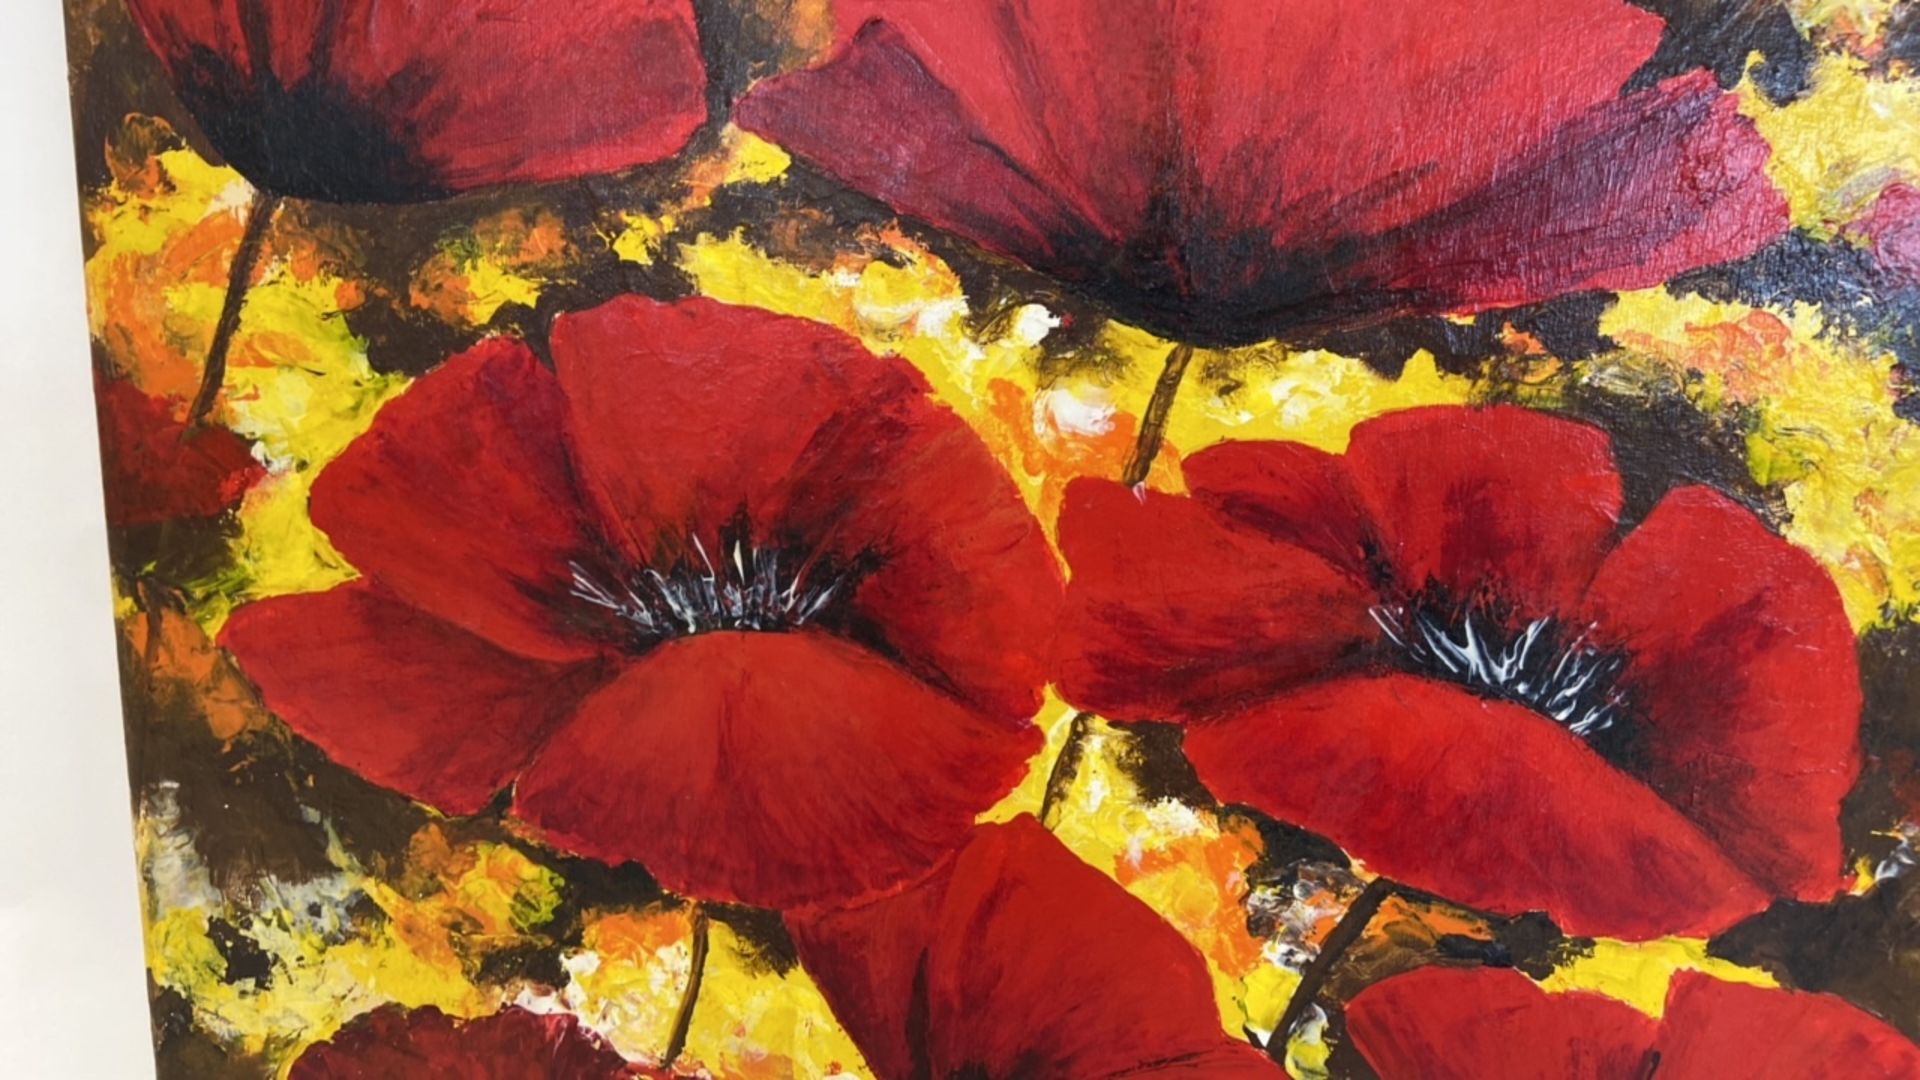 Poppy Acrylic Painting on Canvas - Image 2 of 3